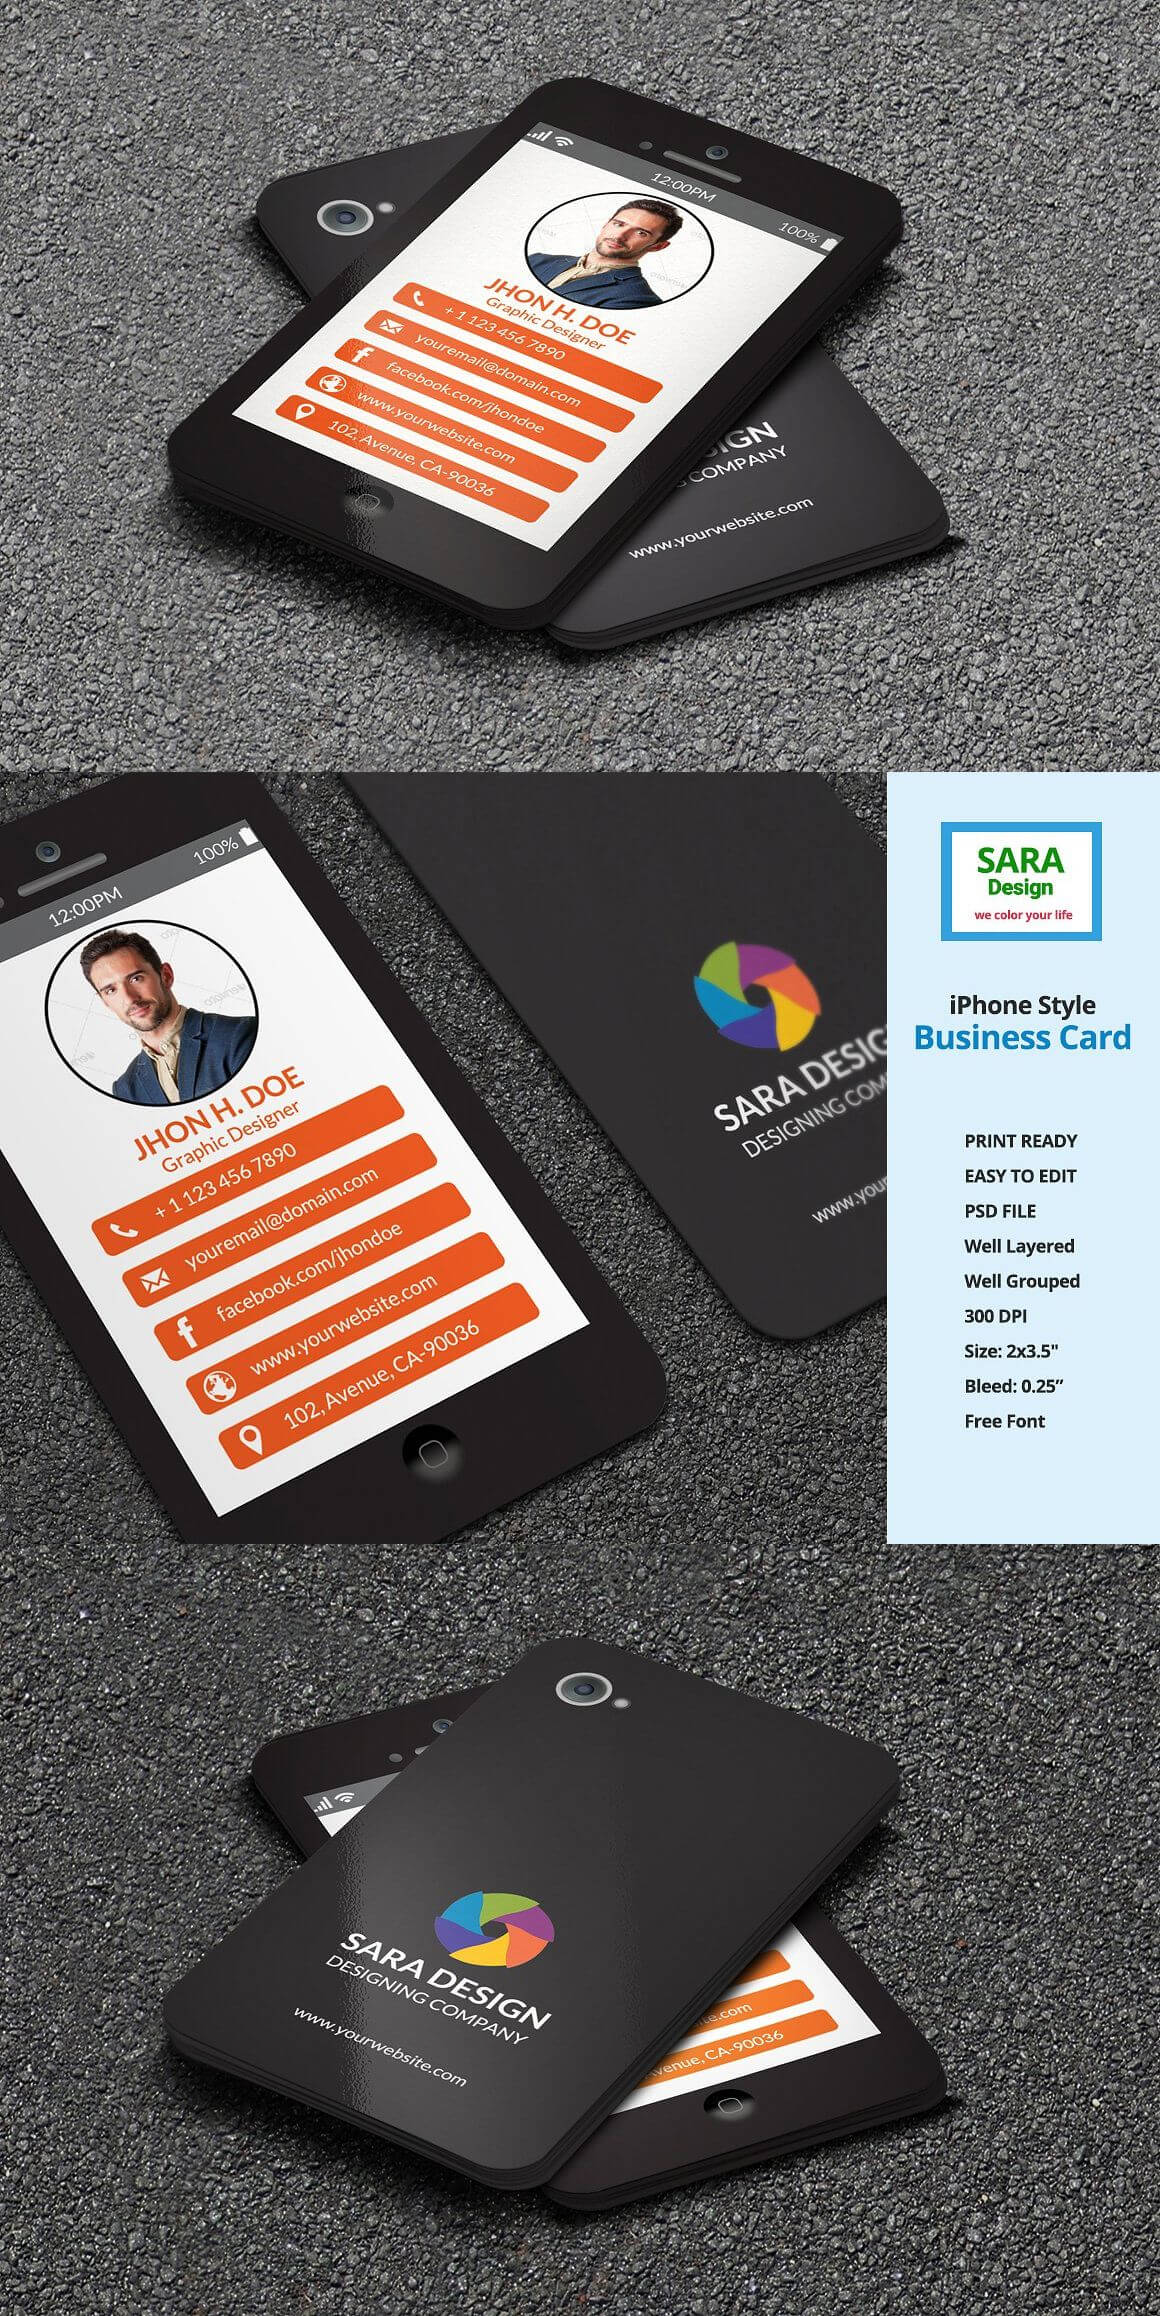 Iphone Stylish Business Card Templates Psd | Business Card Intended For Iphone Business Card Template